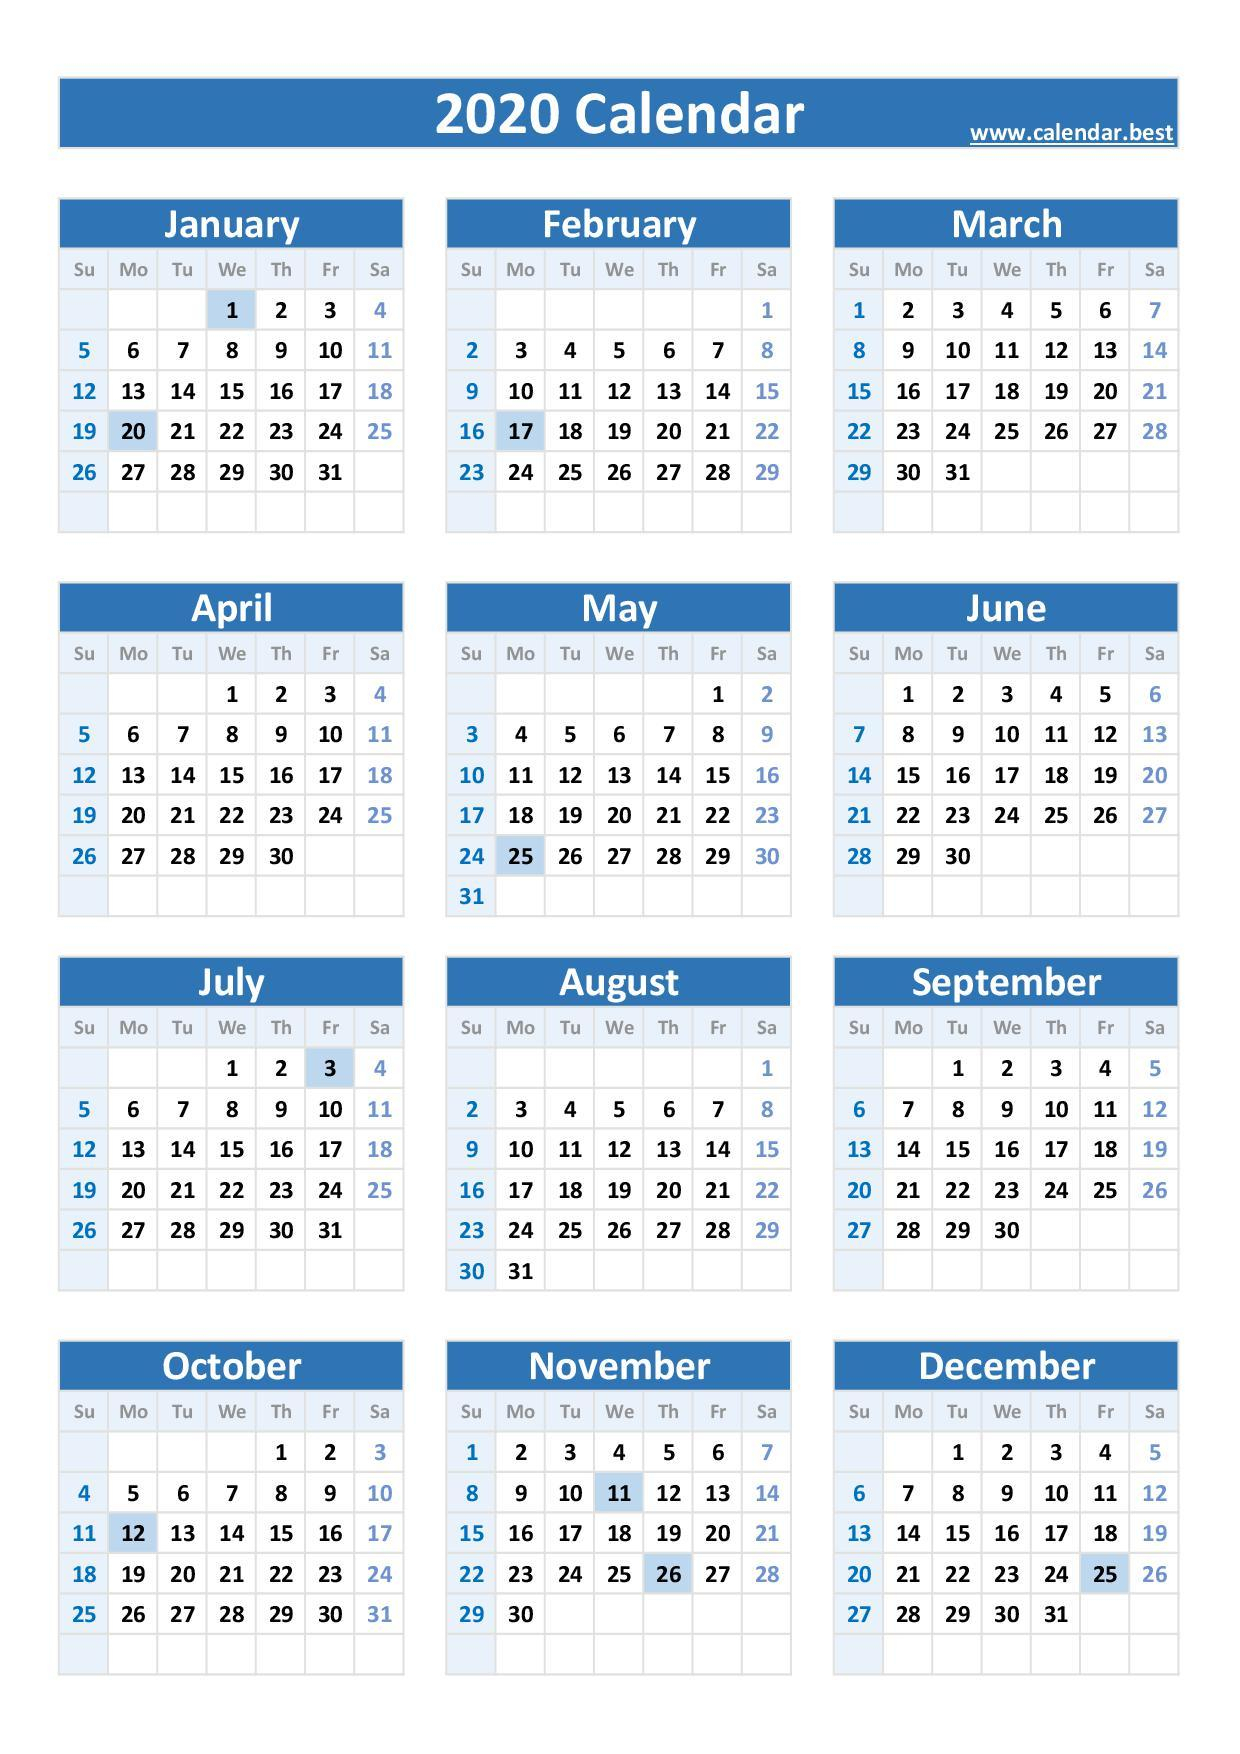 2020, 2021, 2022, 2023 Federal Holidays : List And Calendars